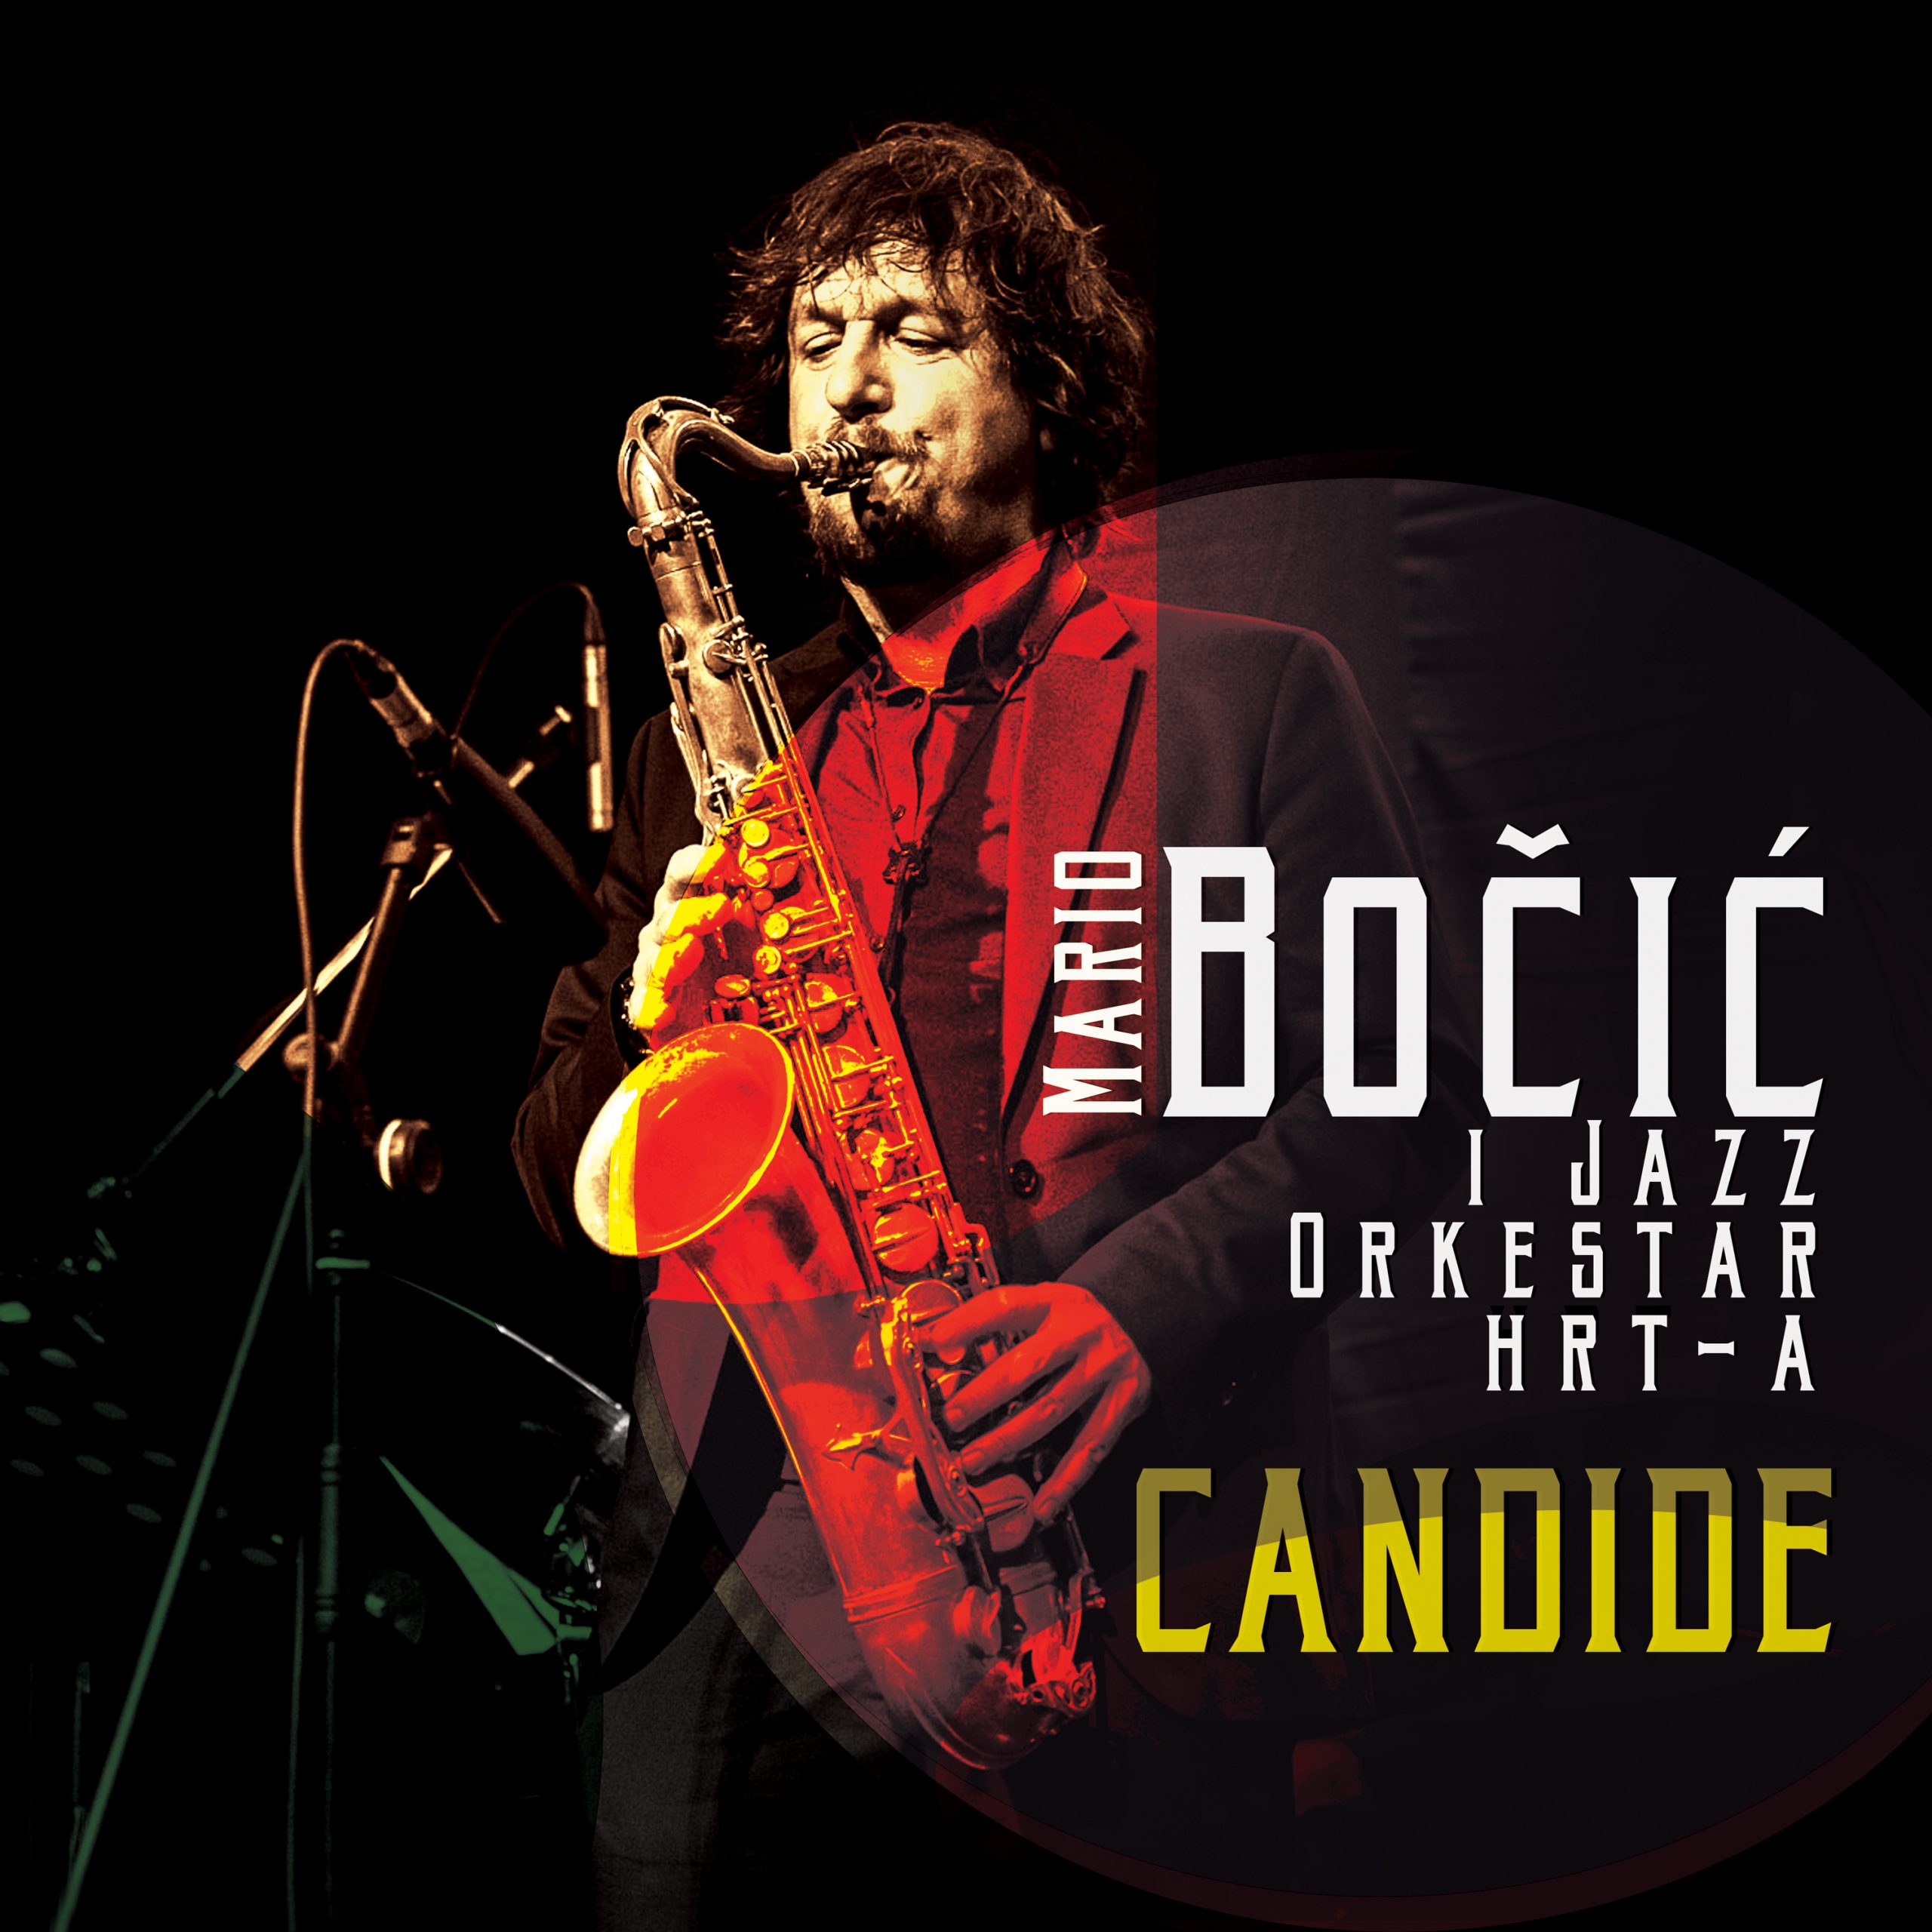 Mario Bočić u suradnji s Jazz orkestrom HRT-a predstavlja “Candide”